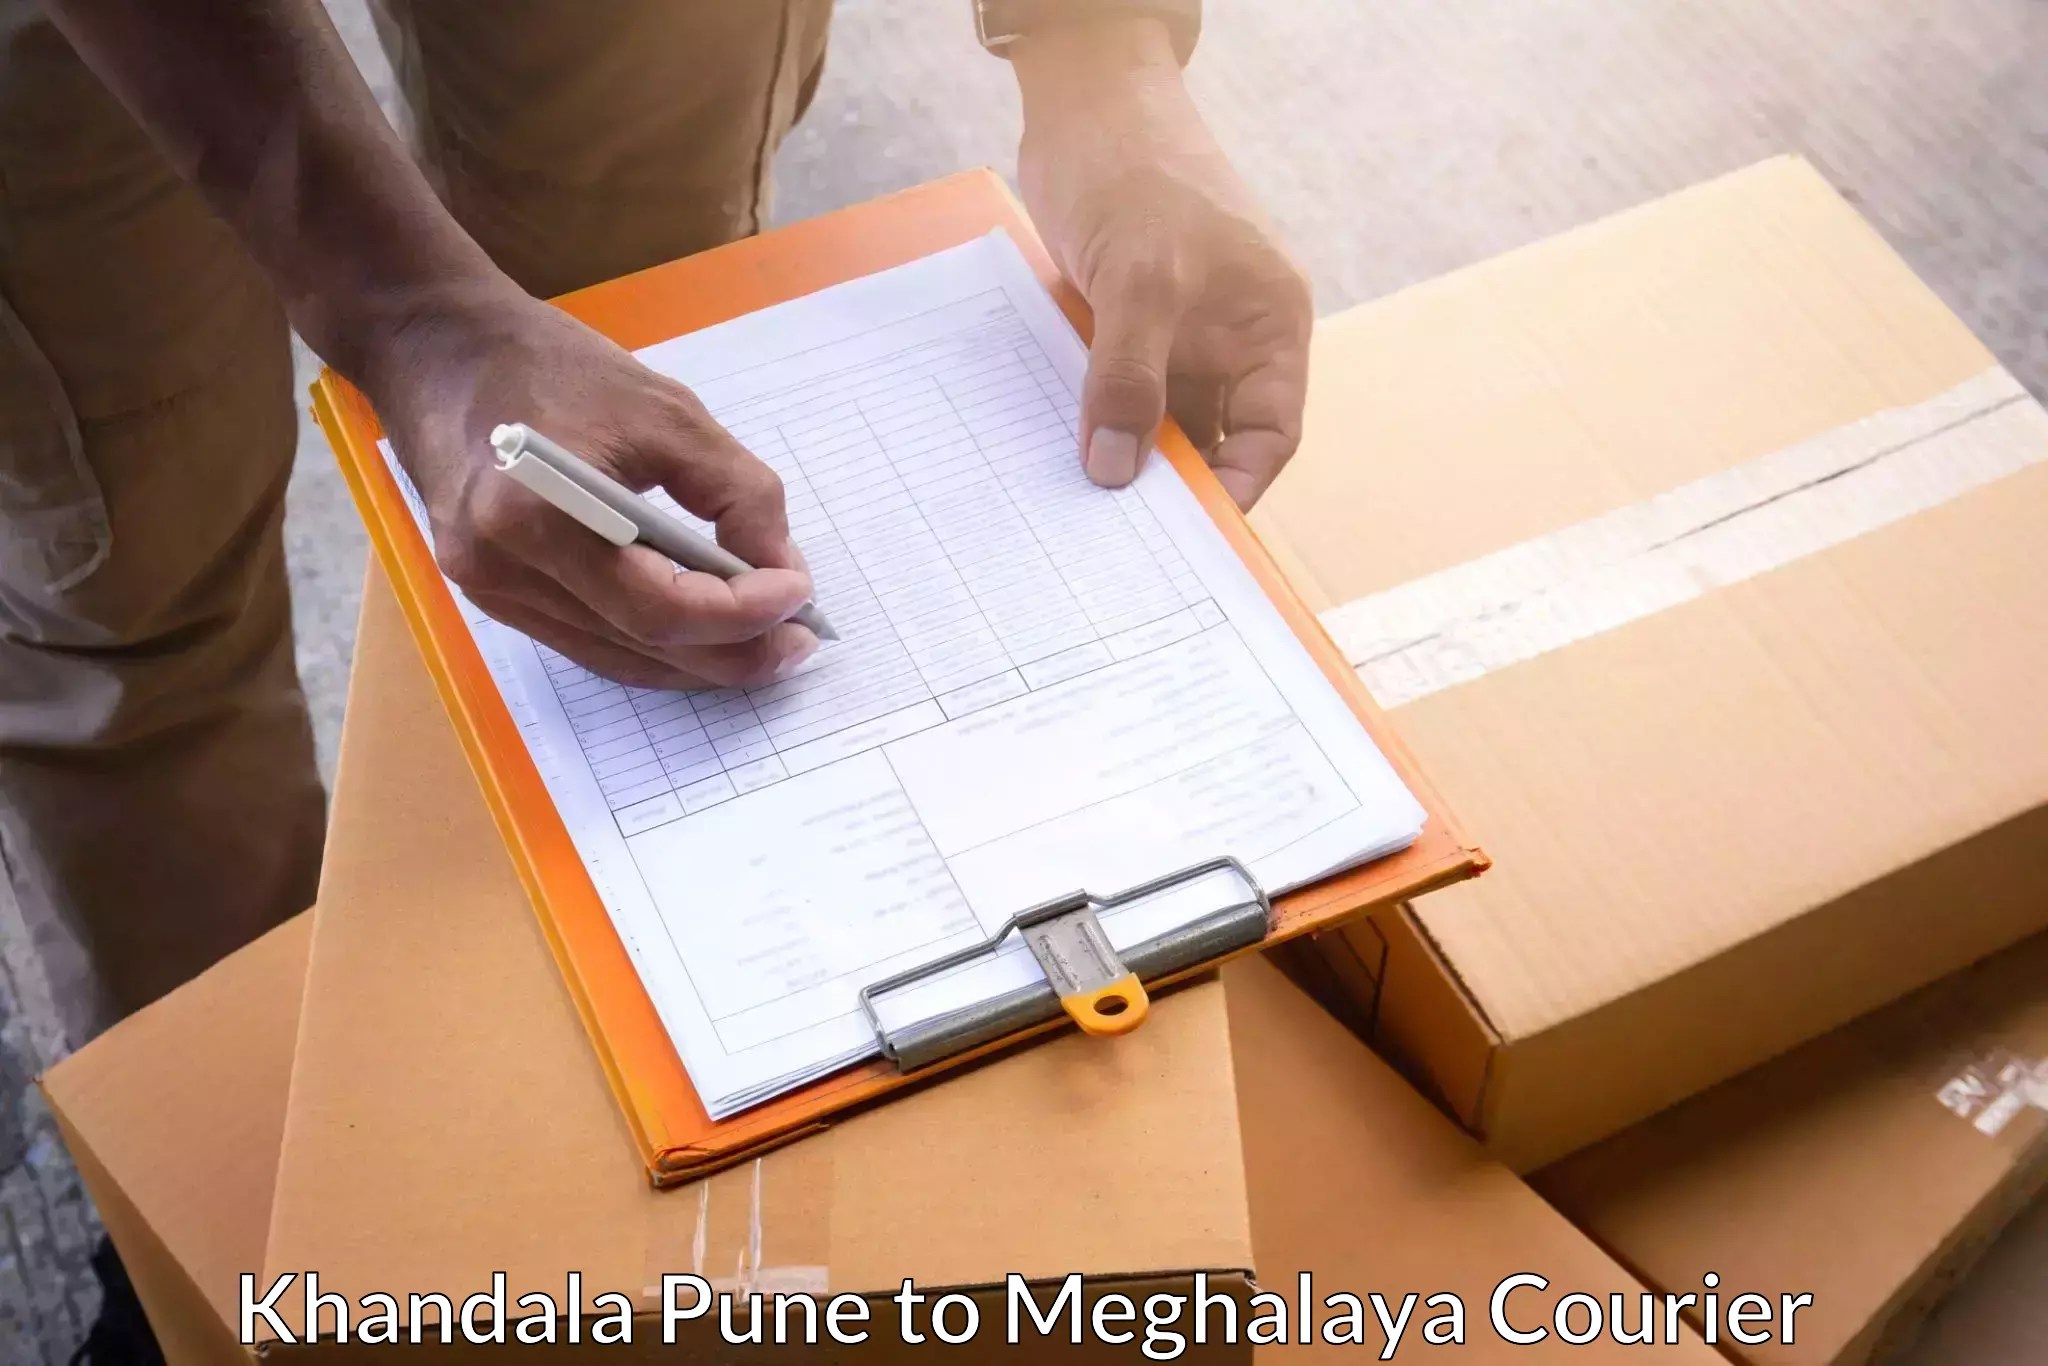 Local courier options Khandala Pune to Meghalaya